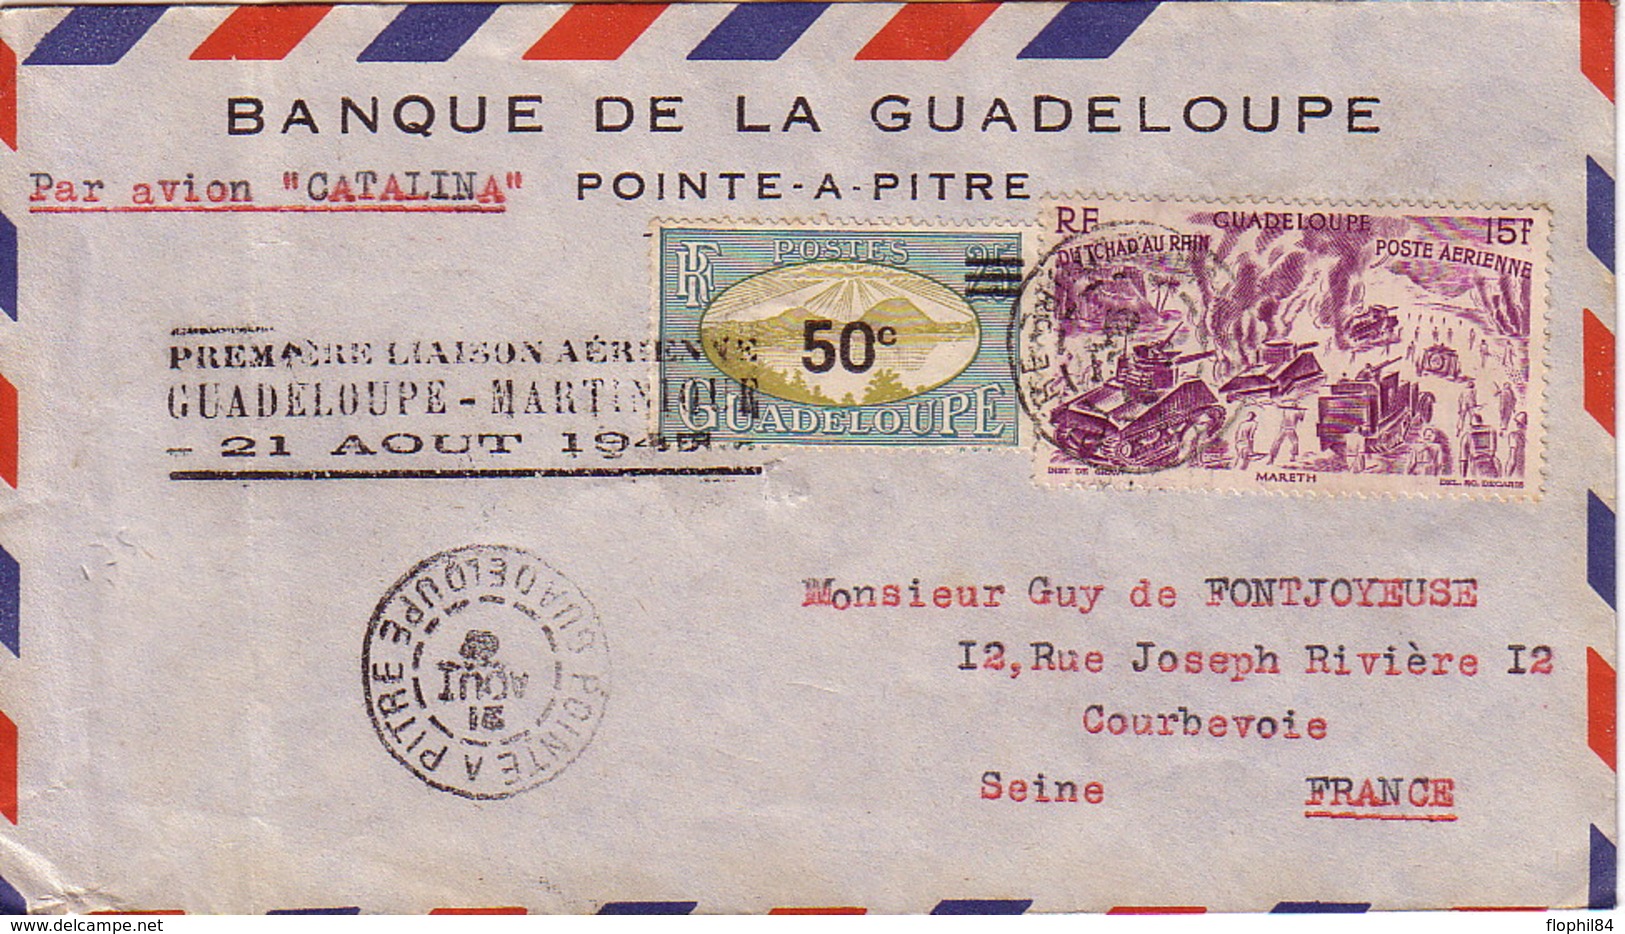 GUADELOUPE - POINTE A PITRE - 1er LIAISON AERIENNE GUADELOUPE-MARTINIQUE - 21 AOUT 1947. - Briefe U. Dokumente